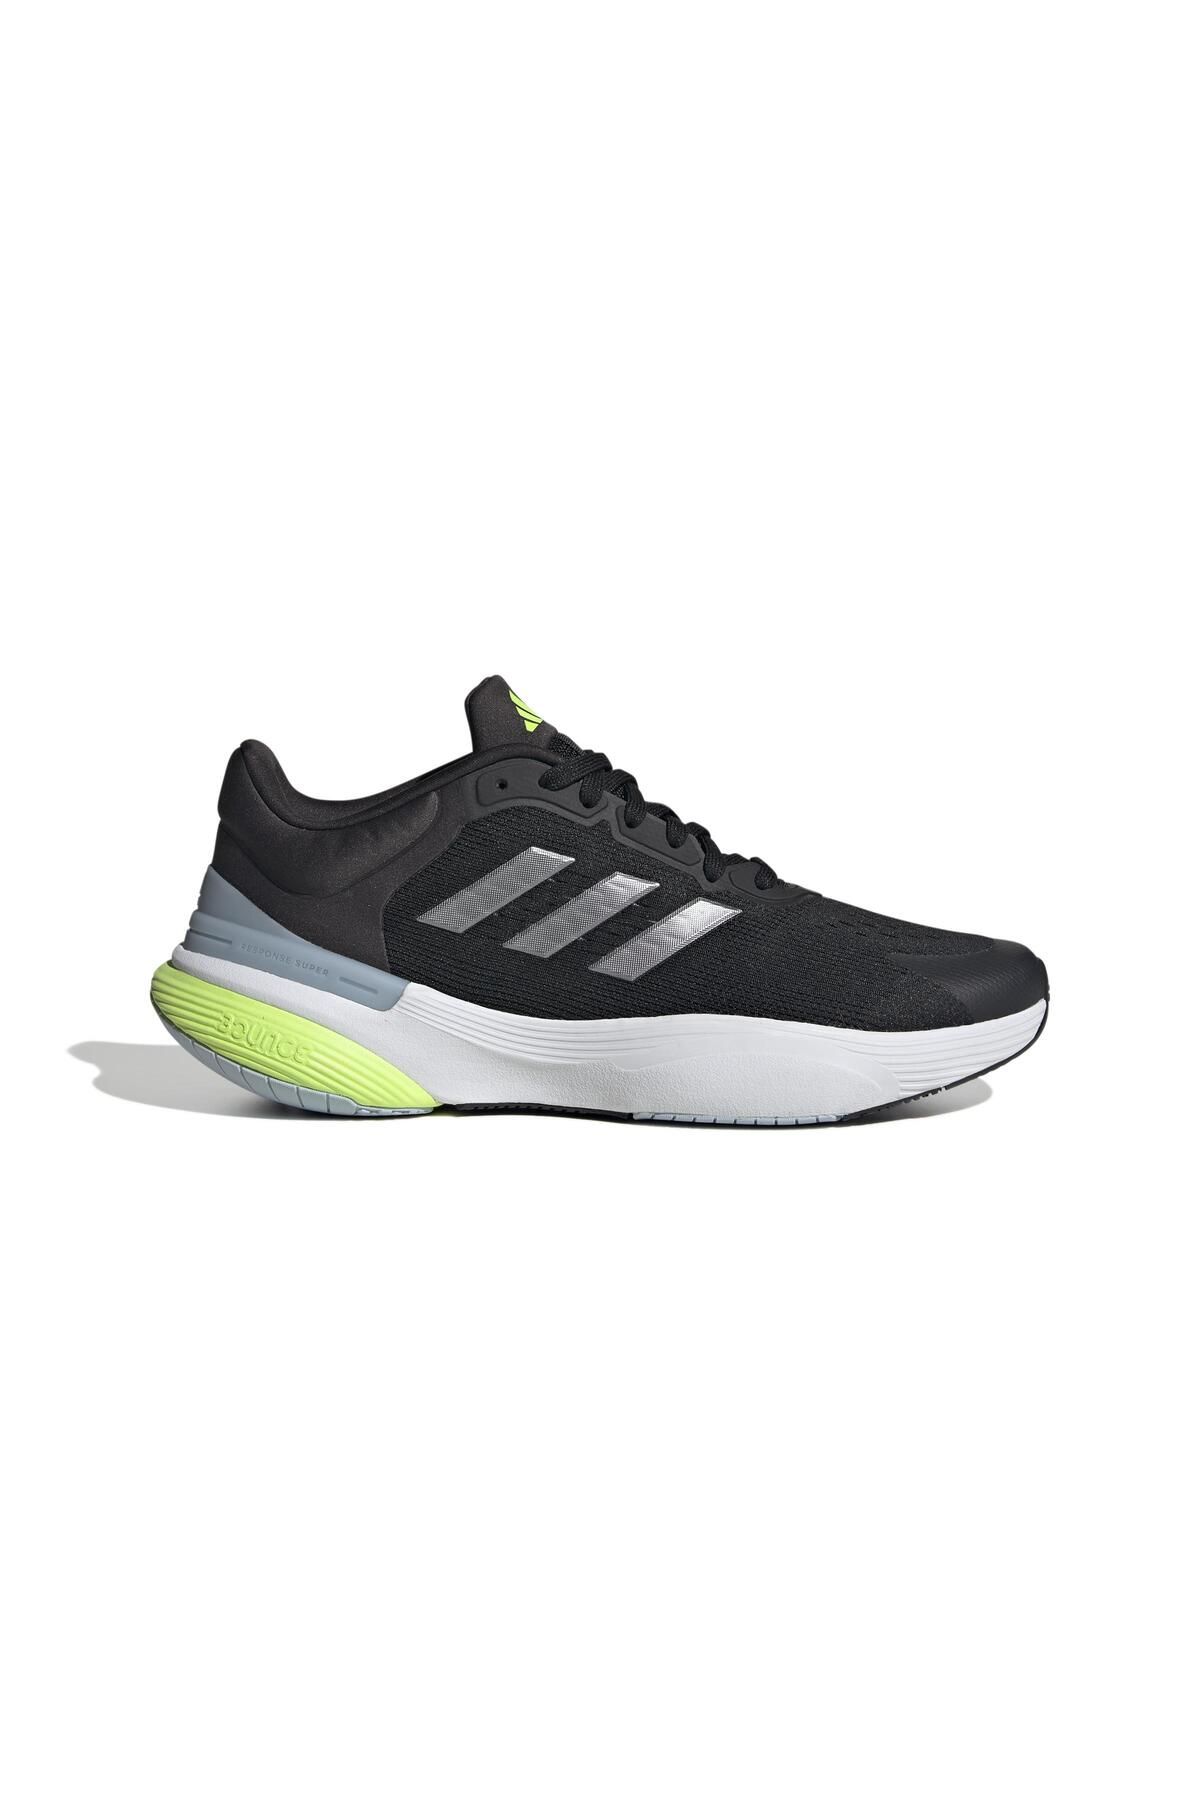 adidas Response Super 3.0 Erkek Koşu Ayakkabı